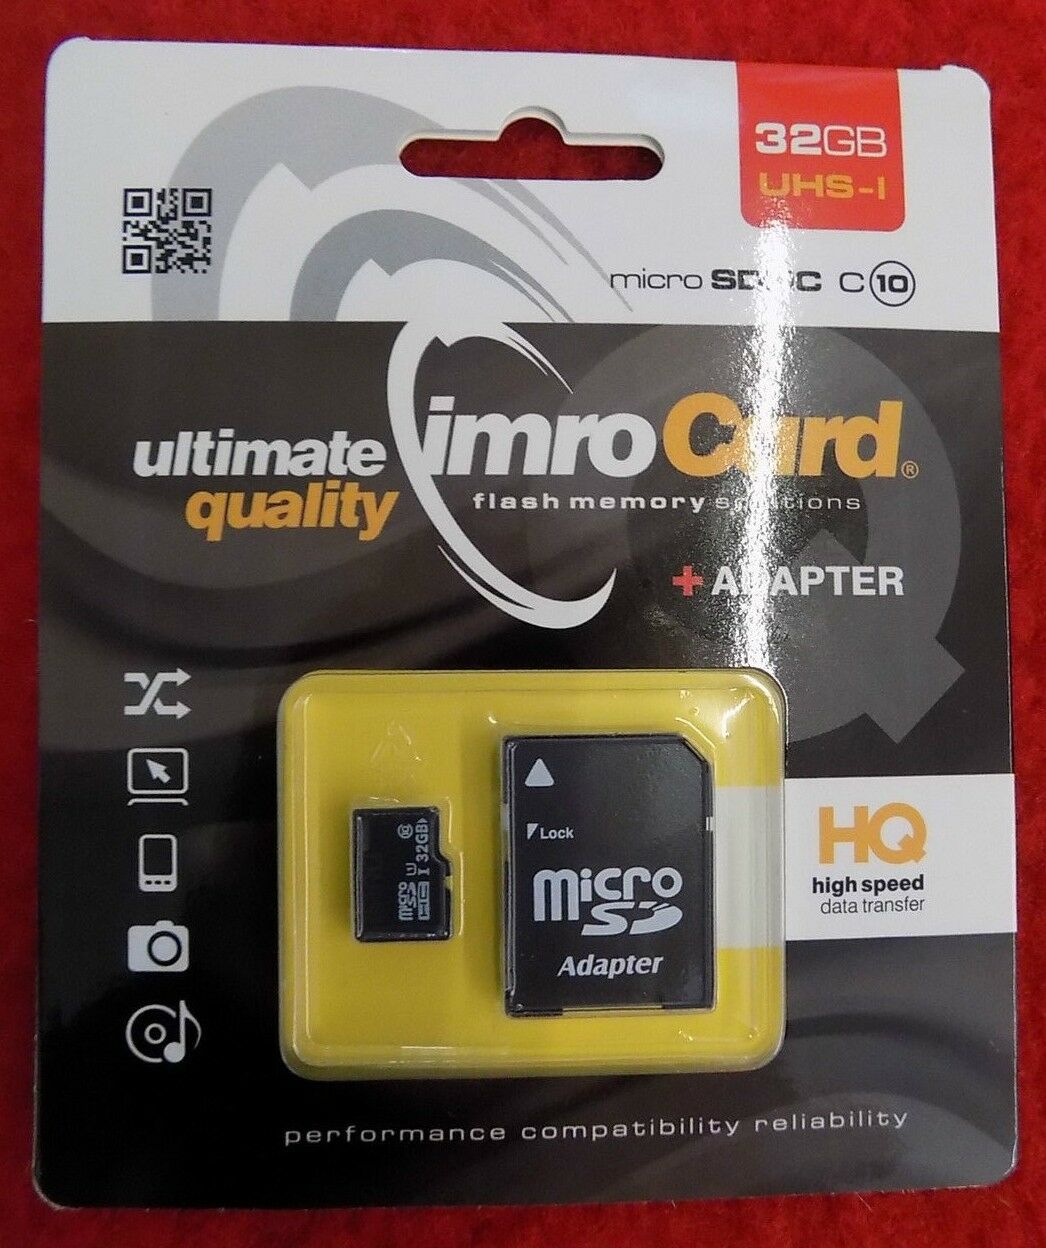 imroCard Speicherkarte HQ 32GB UHS-I mirco SDHC mit Adapter class 10 ADP - Flex-Autoteile